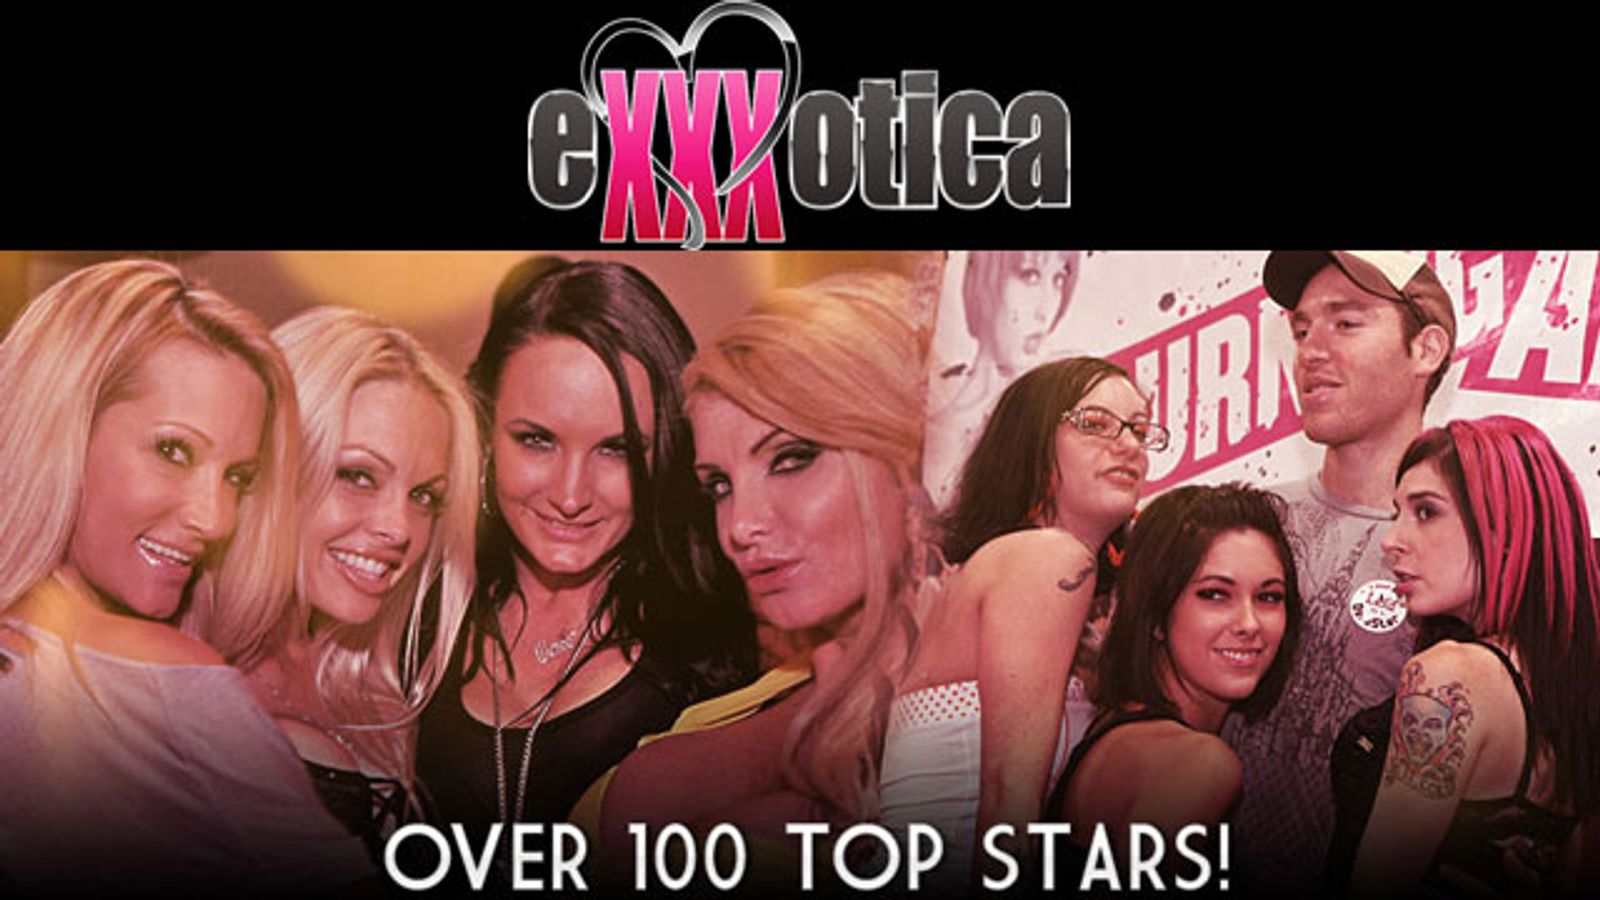 Exxxotica New Jersey Announces Star-Studded Lineup